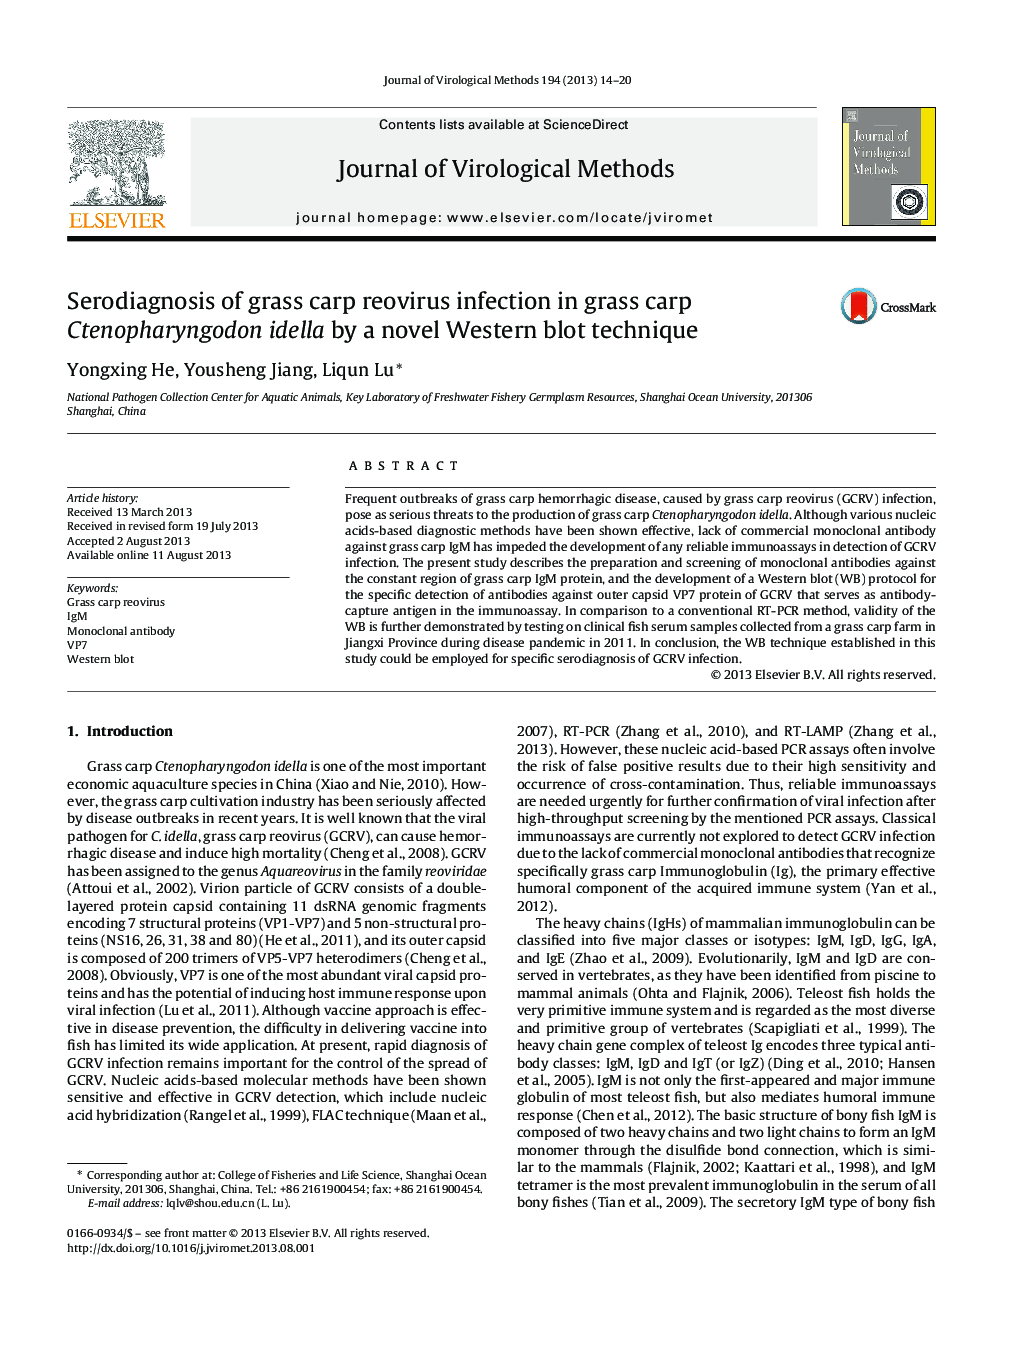 Serodiagnosis of grass carp reovirus infection in grass carp Ctenopharyngodon idella by a novel Western blot technique